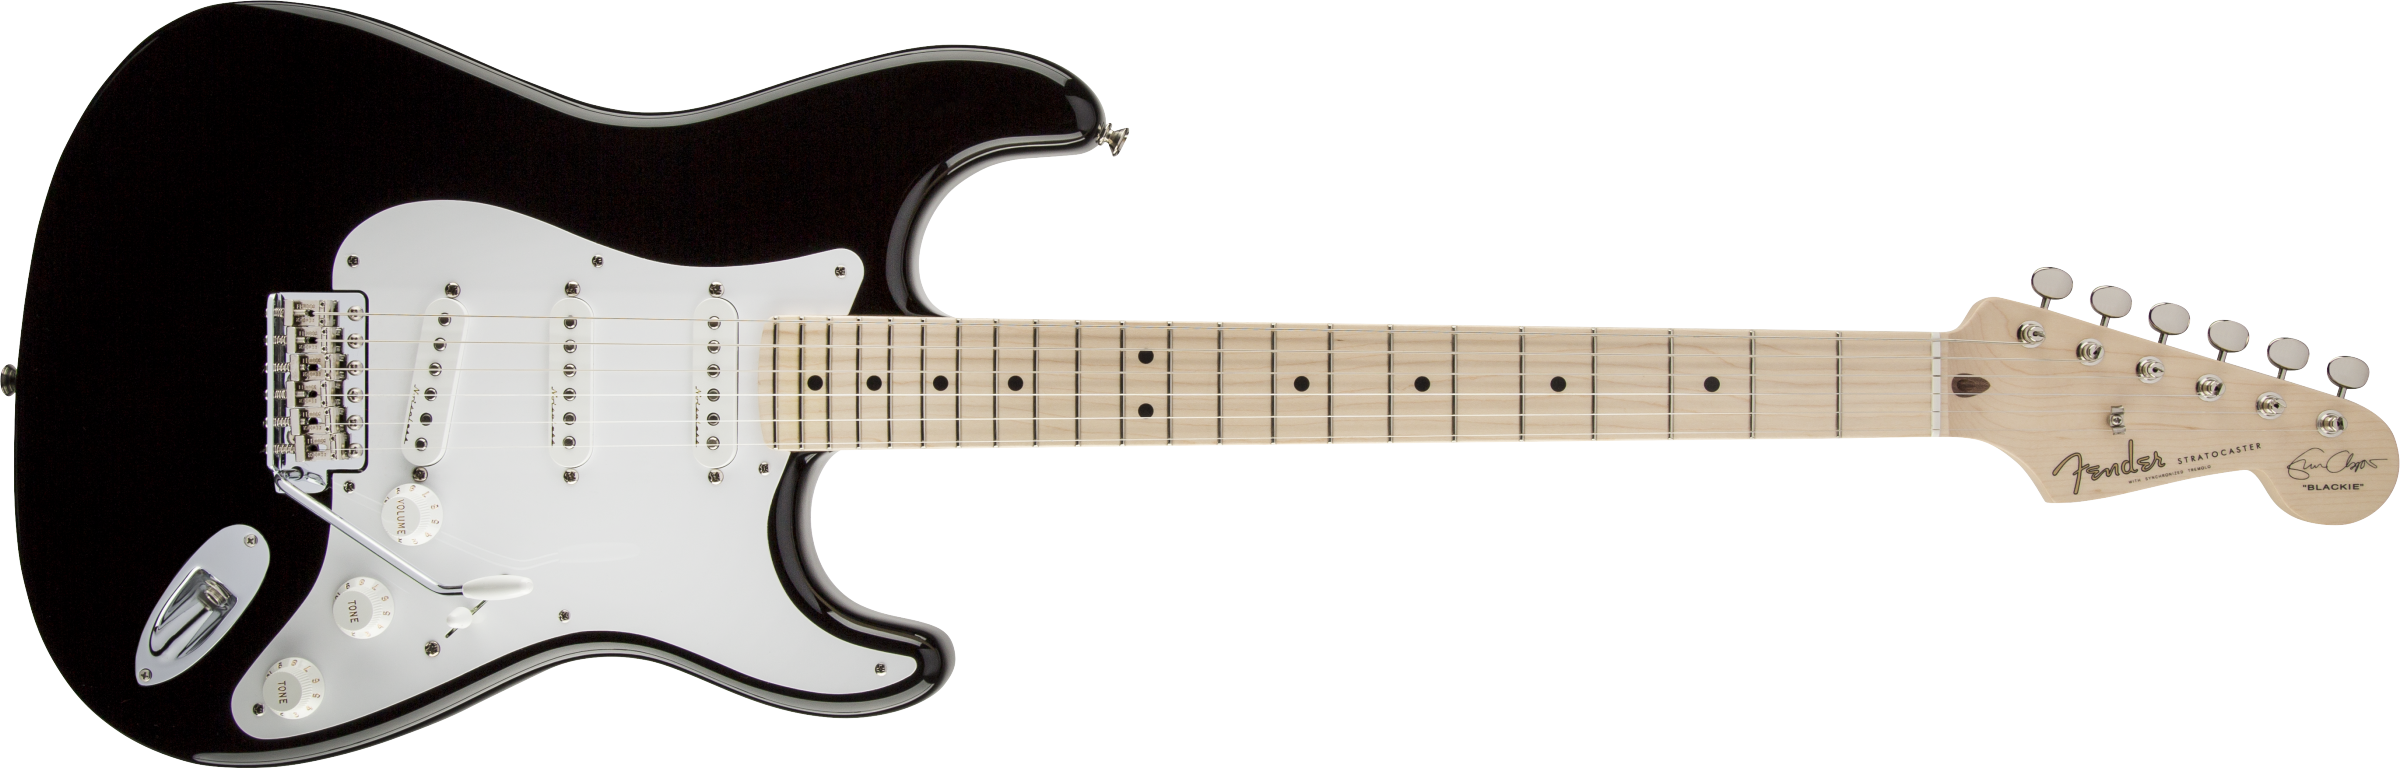 FENDER - Eric Clapton Signature Stratocaster Black